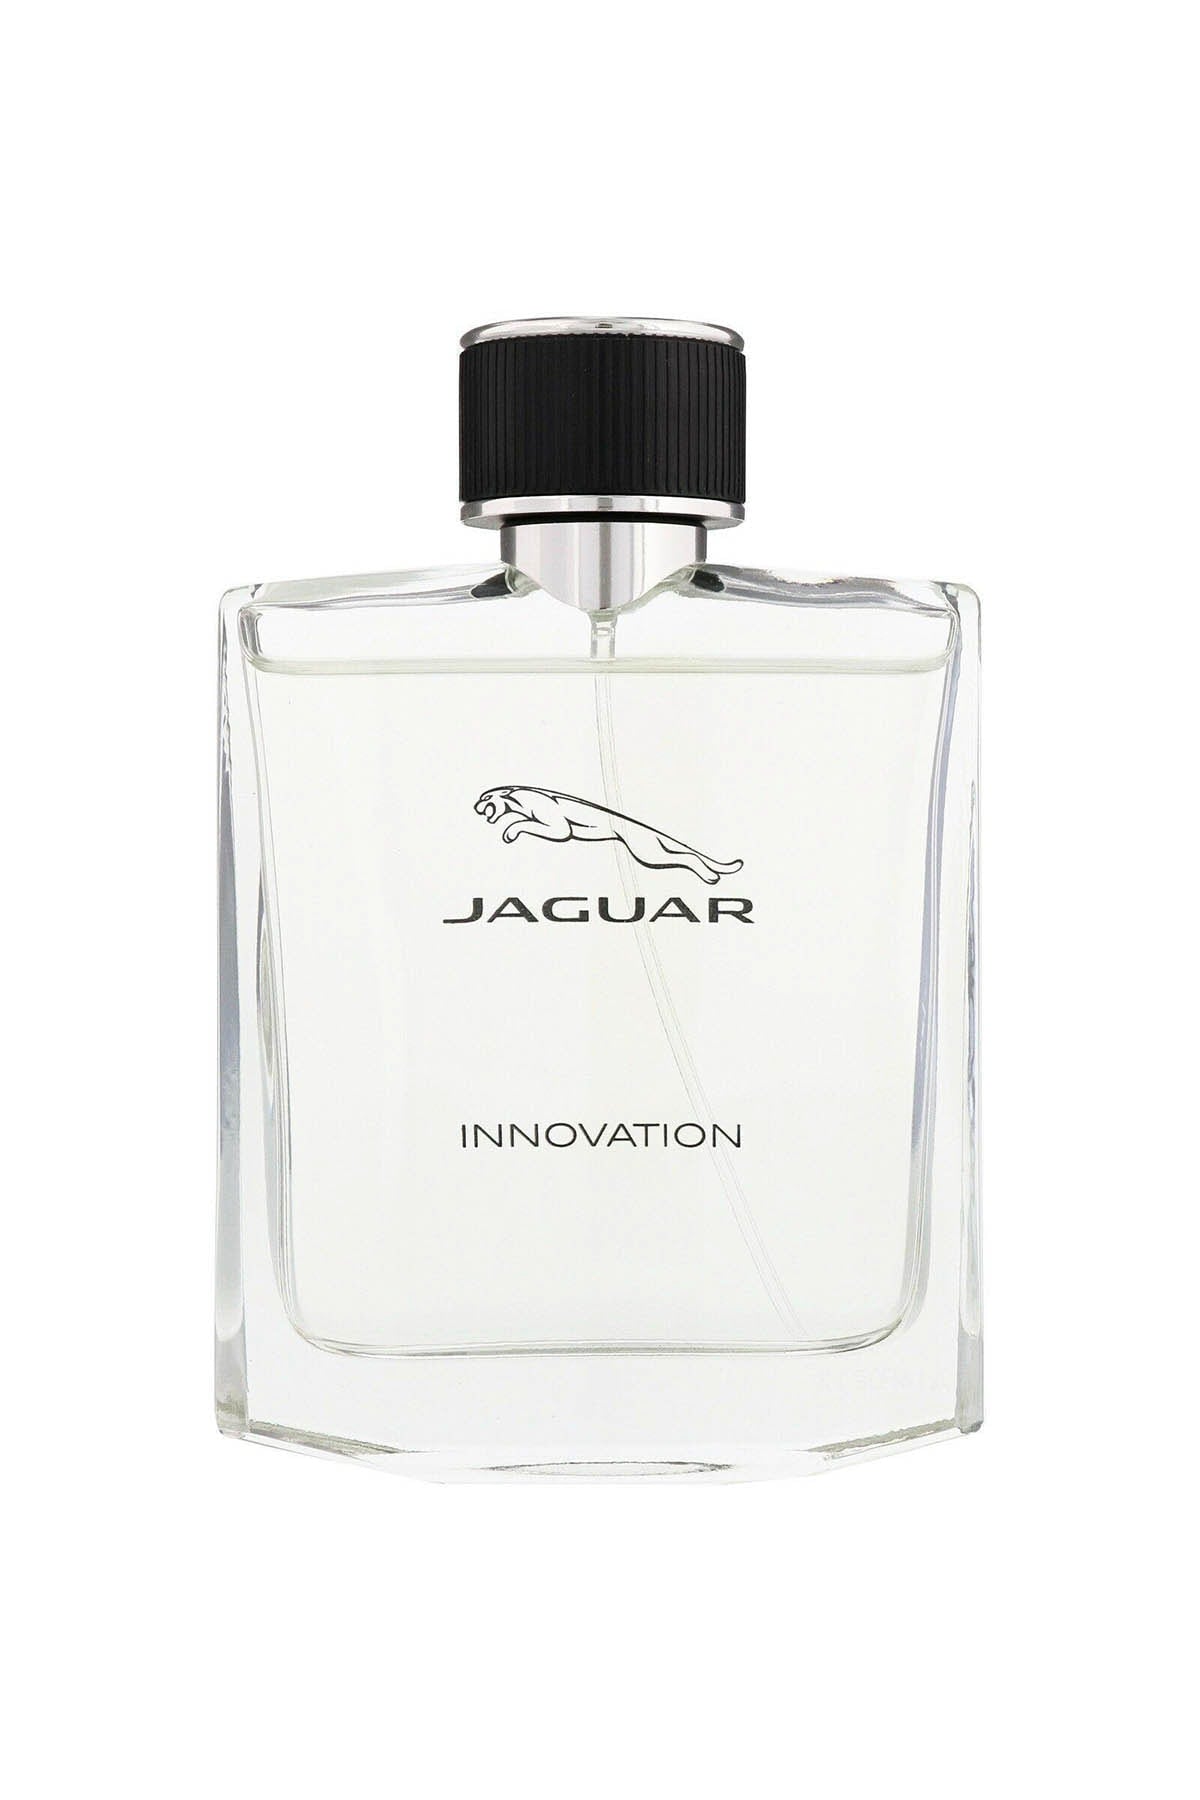 Jaguar Innovation EDT M 60ml Boxed (Rare Selection)